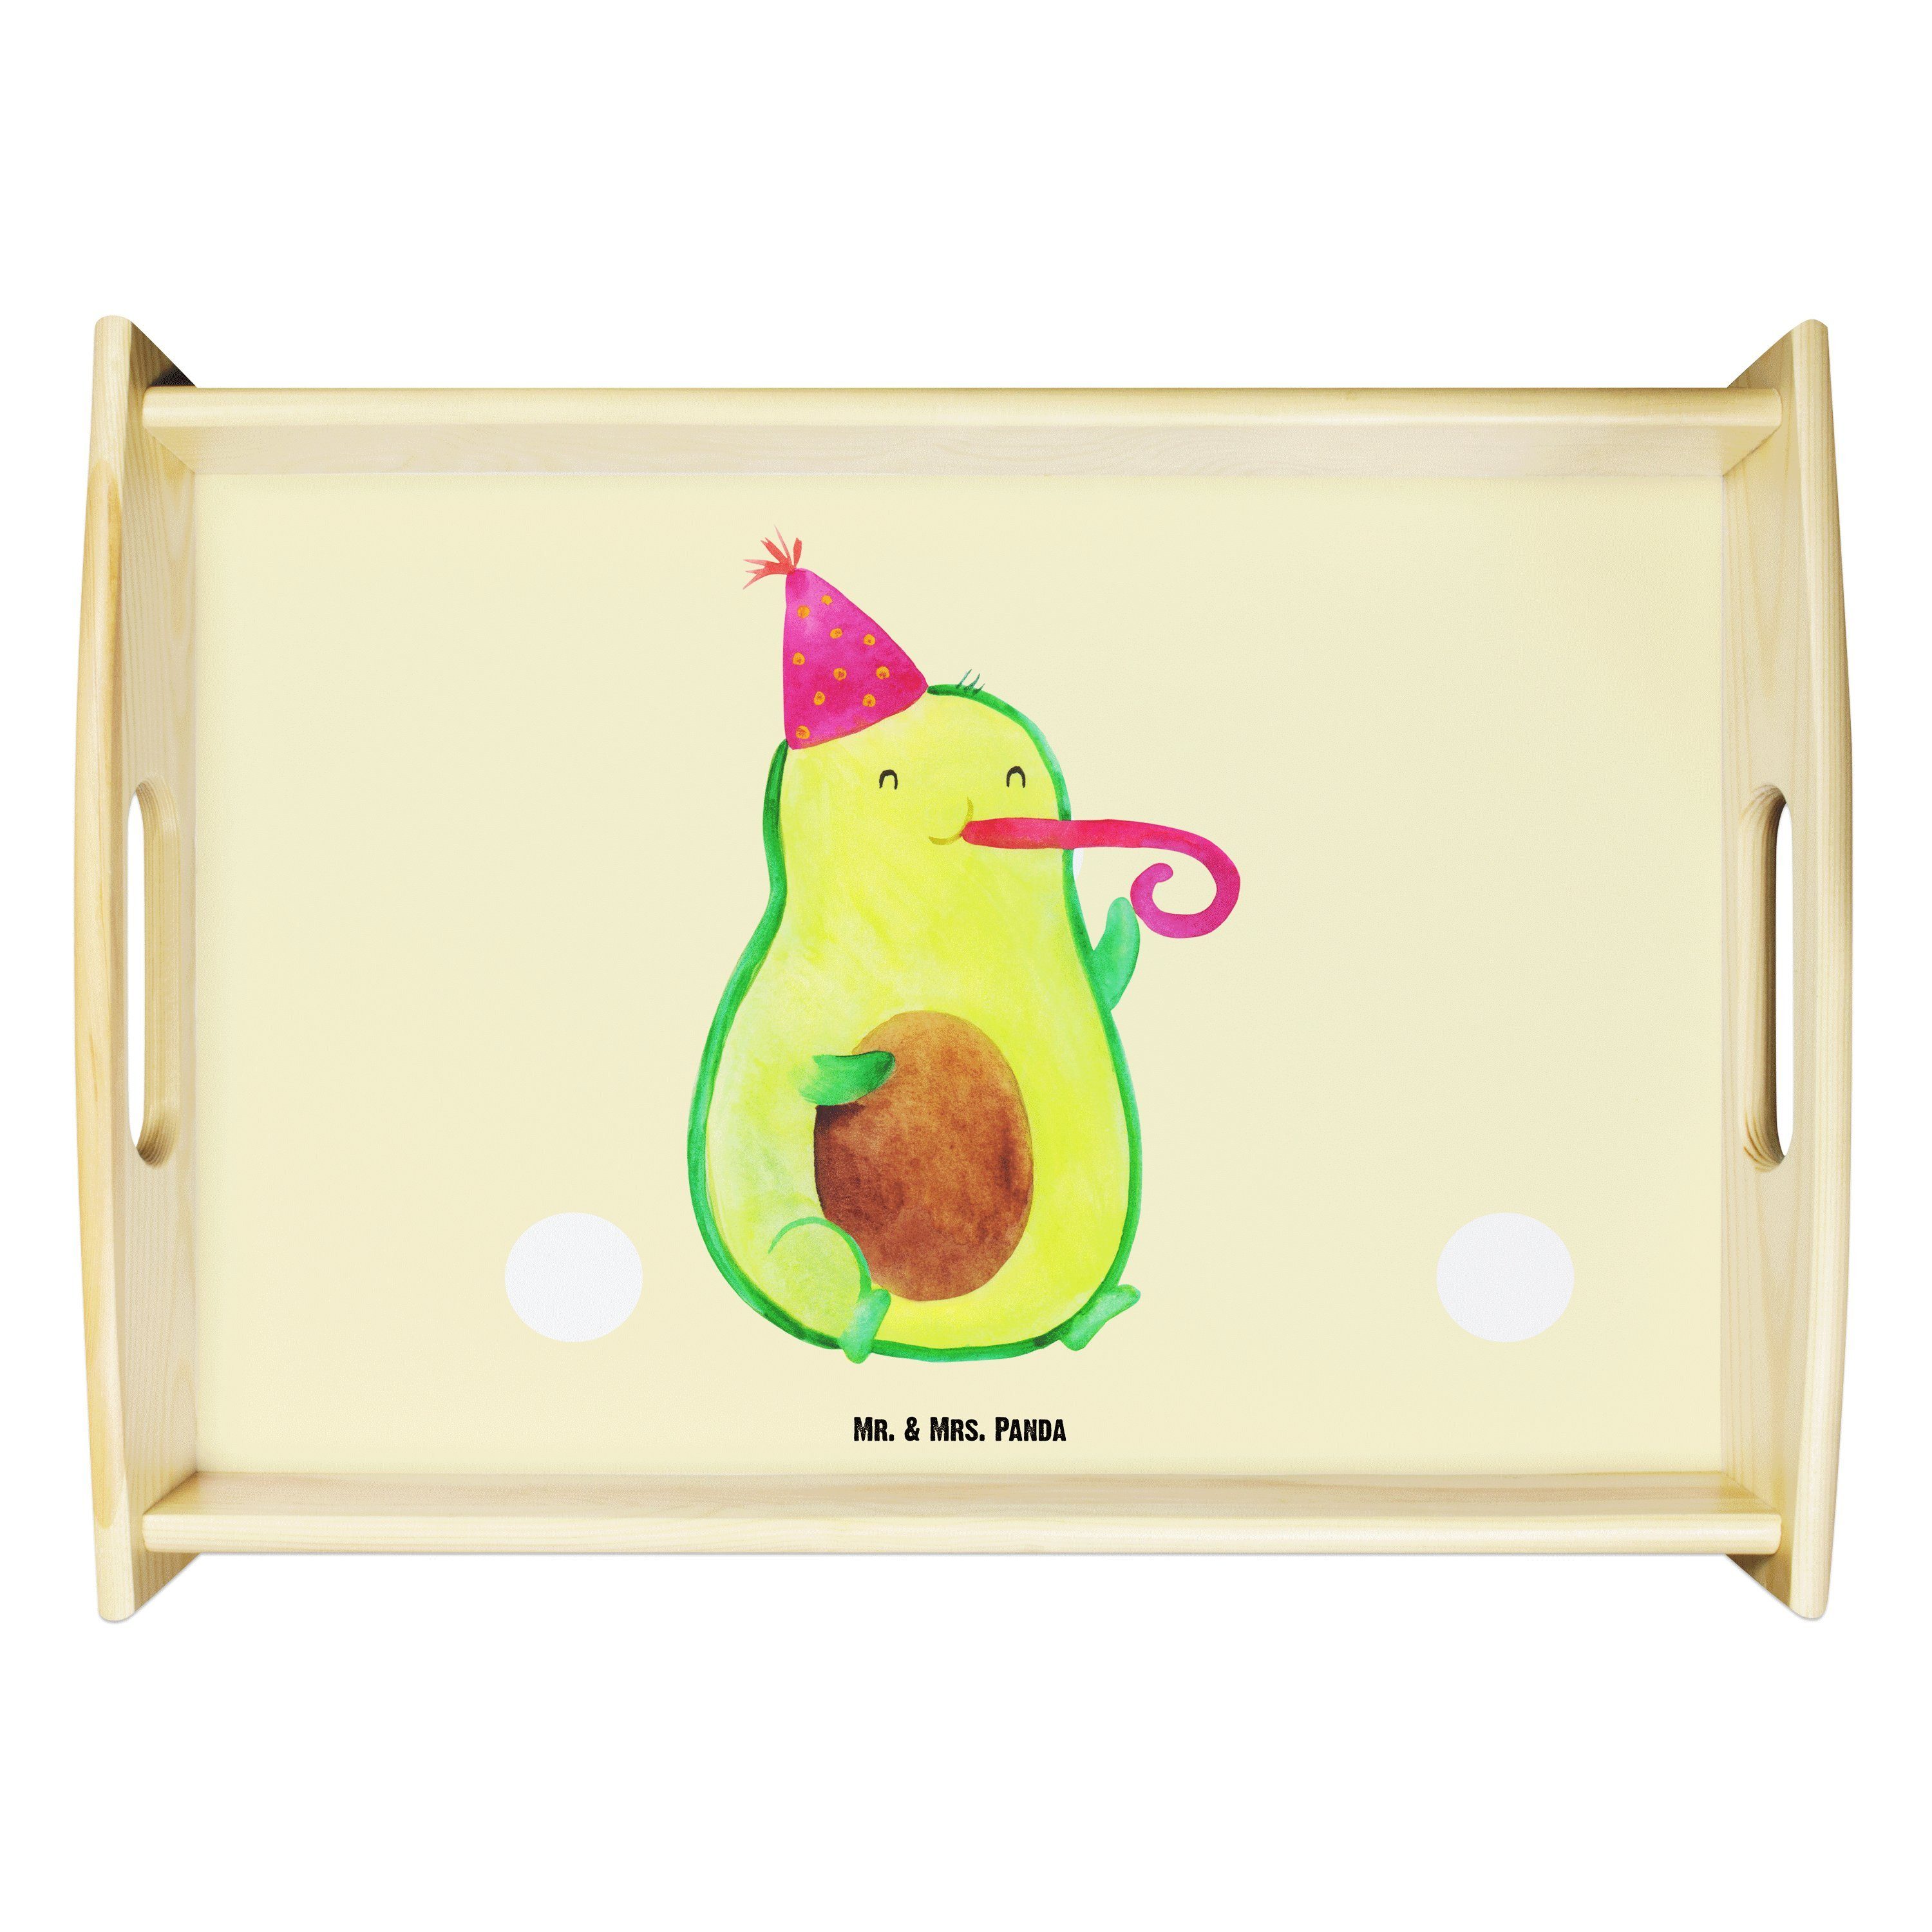 Mr. & Mrs. Panda Tablett Avocado Party Time - Gelb Pastell - Geschenk, Vegan, Lebensfroh, Glüc, Echtholz lasiert, (1-tlg)